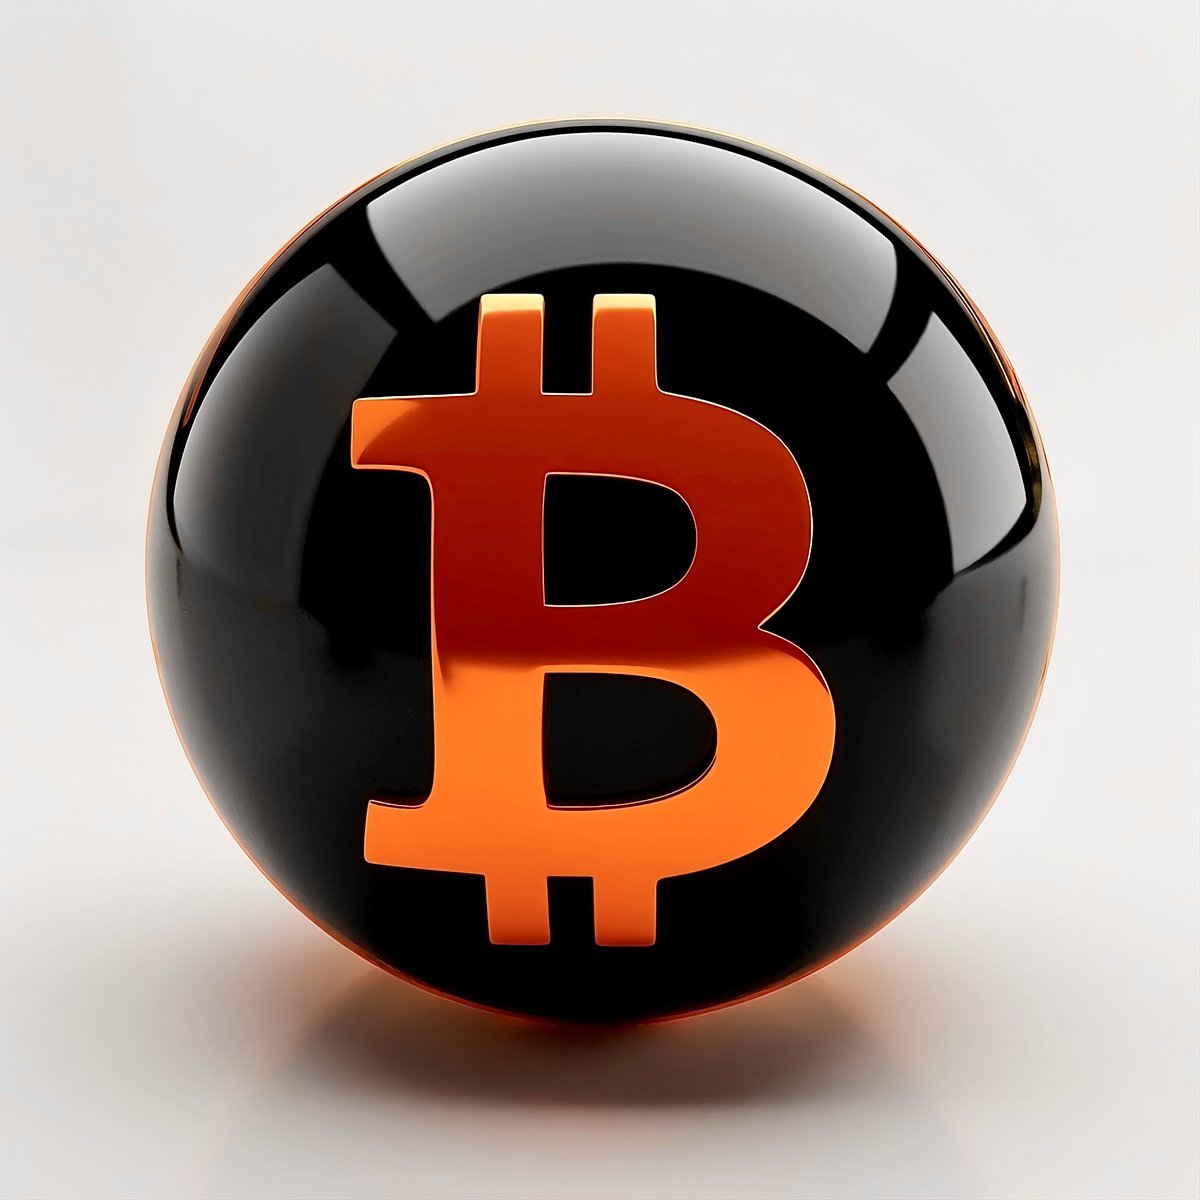 Don't loose focus, don't loose the ball #bitcoin #HODL